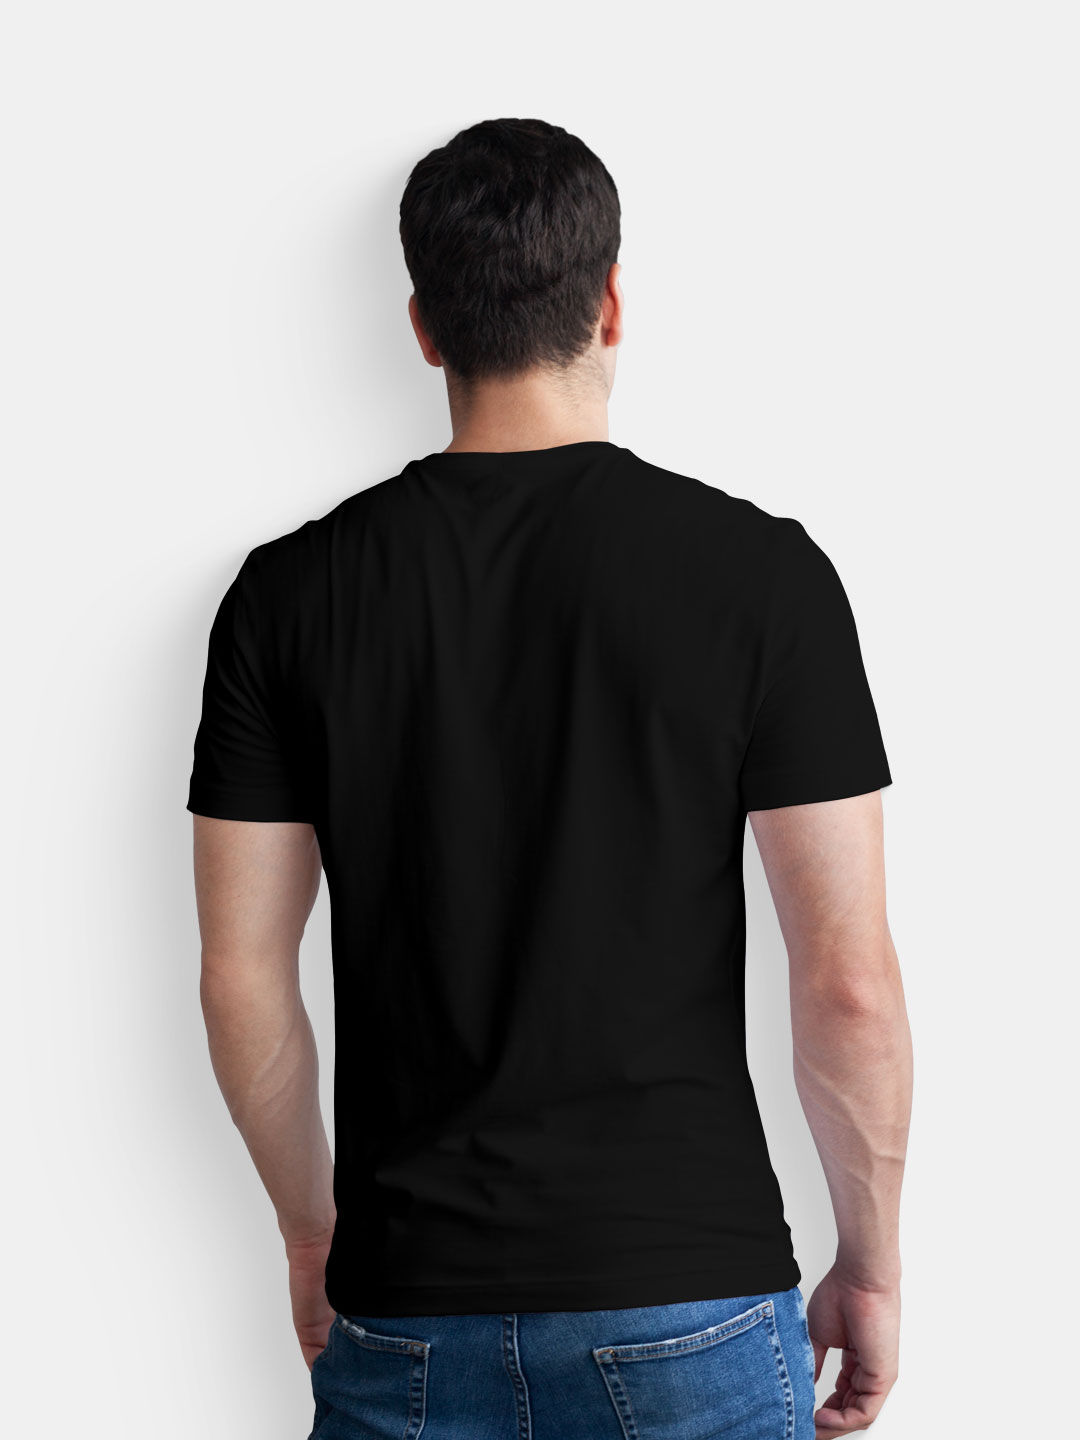 Deadpool Profile - Designer T-Shirts